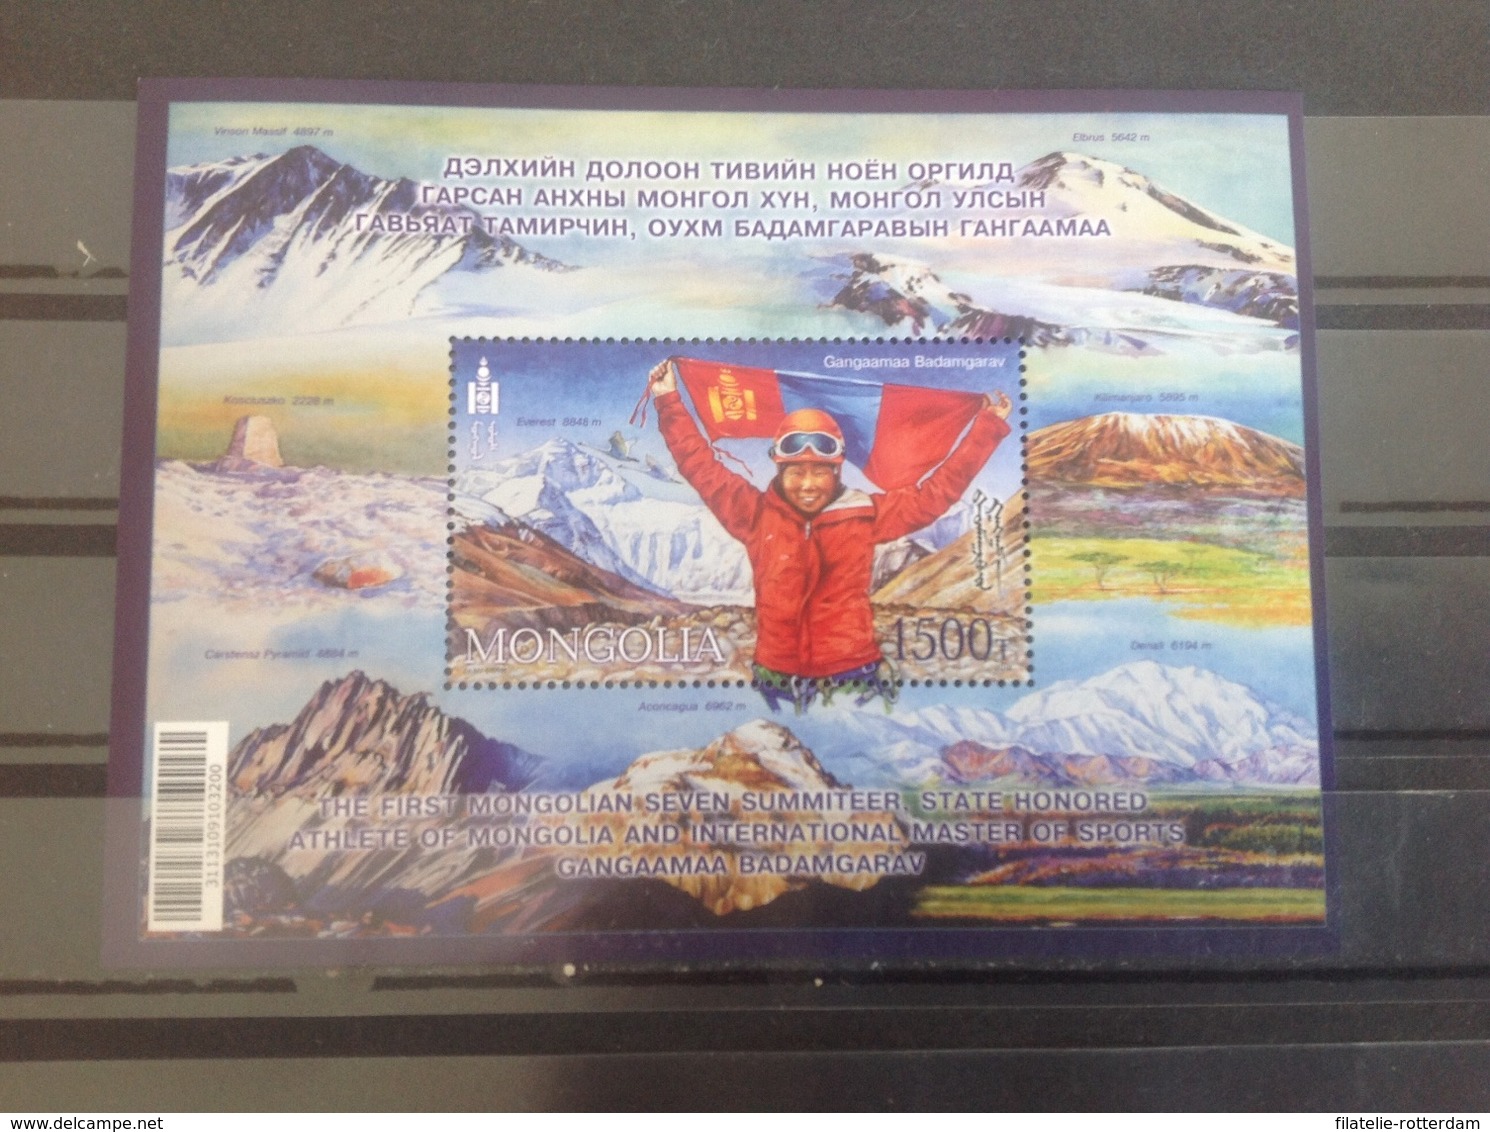 Mongolië / Mongolia - Postfris / MNH - Sheet First Mongolian 7 Summiteer 2018 - Mongolië